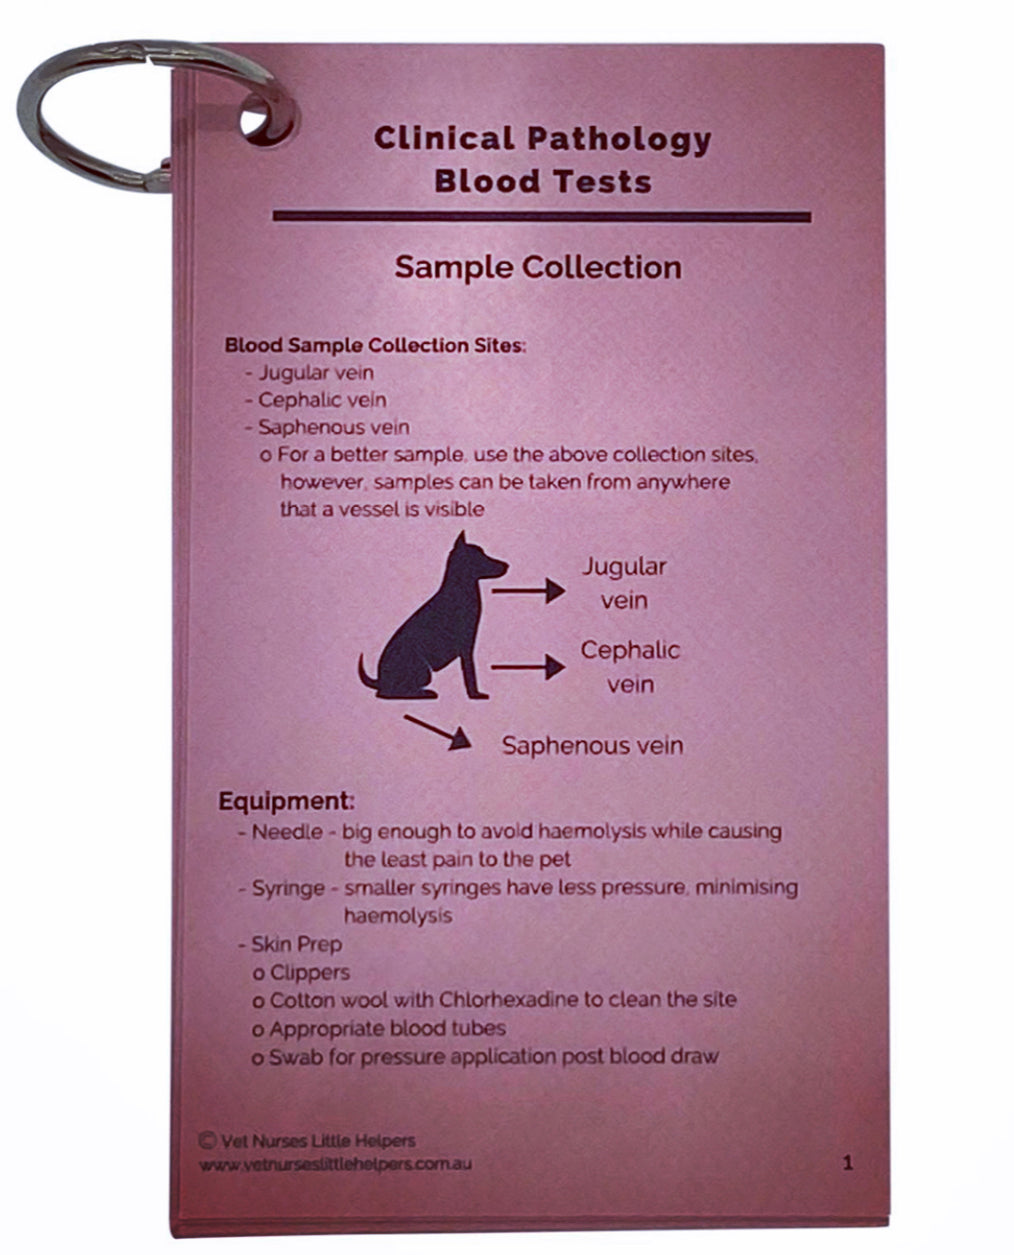 Clinical Pathology - Blood Tests